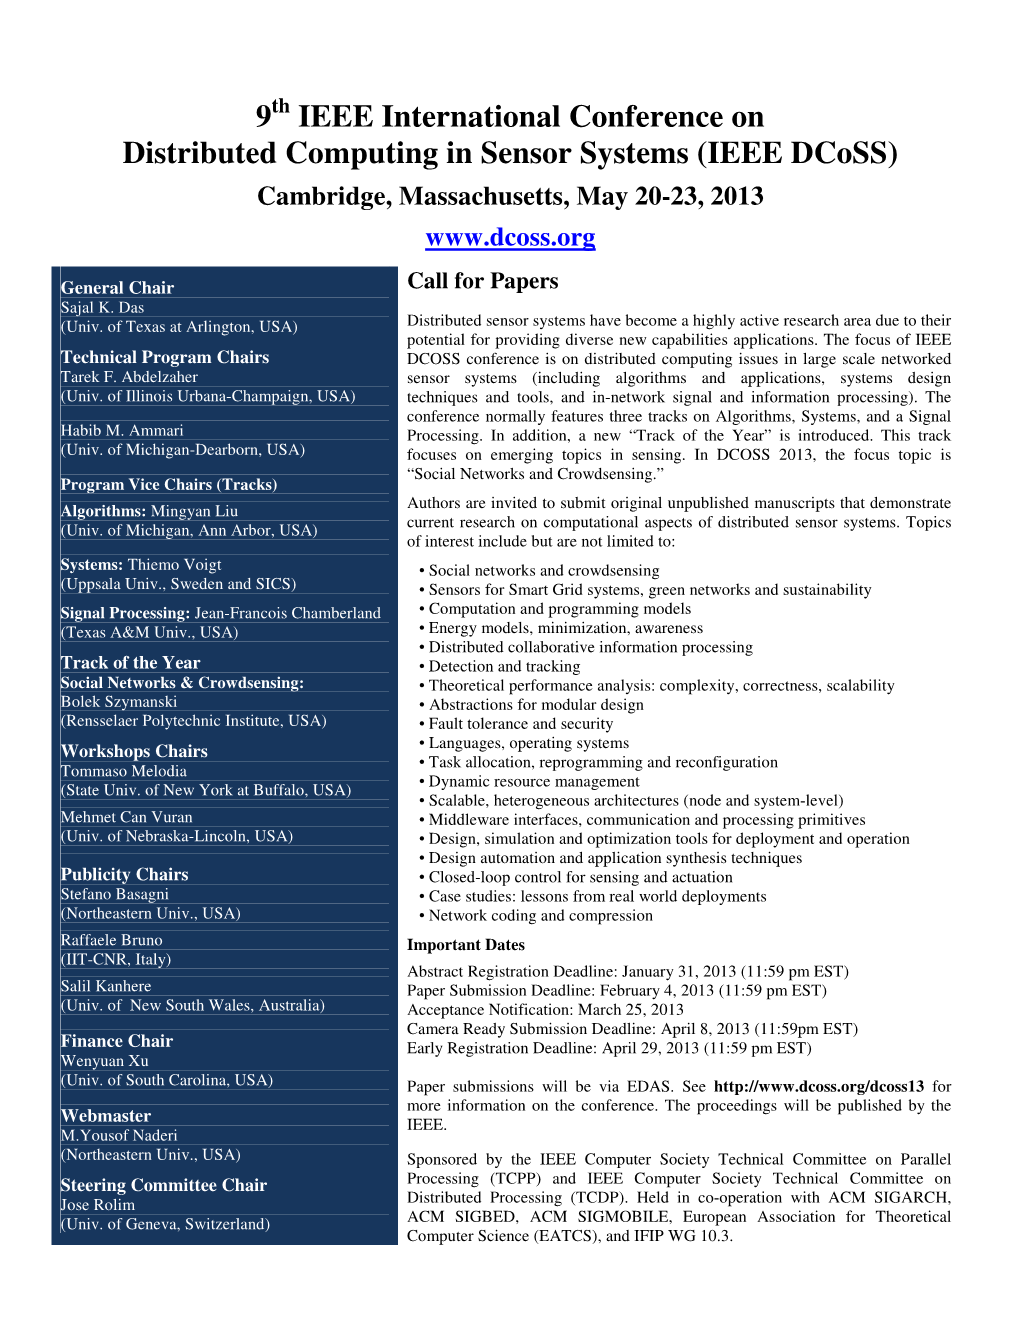 IEEE Dcoss) Cambridge, Massachusetts, May 20-23, 2013